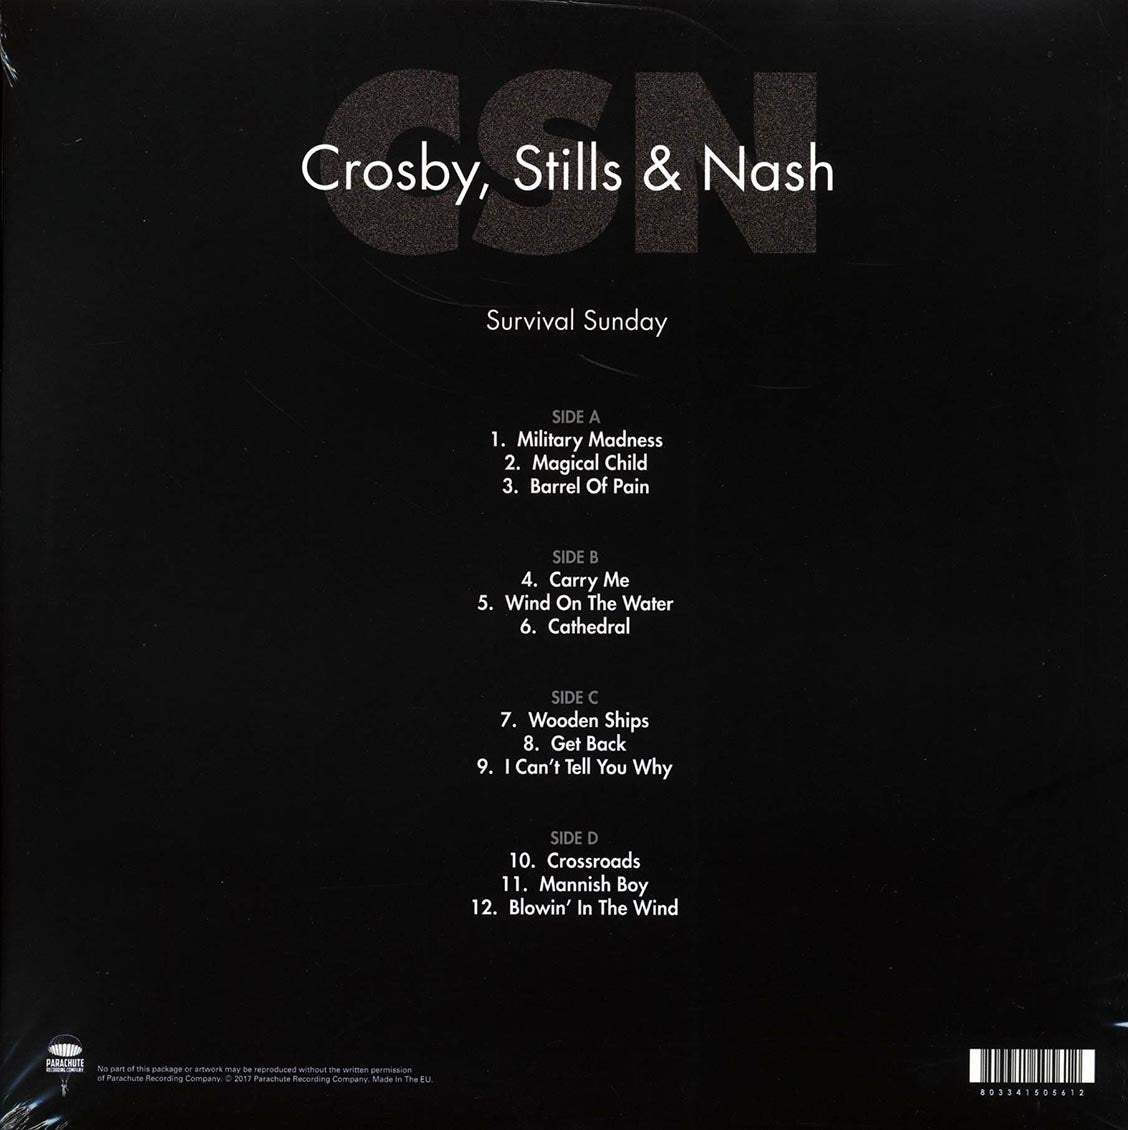 Crosby, Stills & Nash - Survival Sunday: Live At Hollywood Bowl, Los Angeles, CA, May 25, 1980 (2xLP) - Vinyl LP, LP